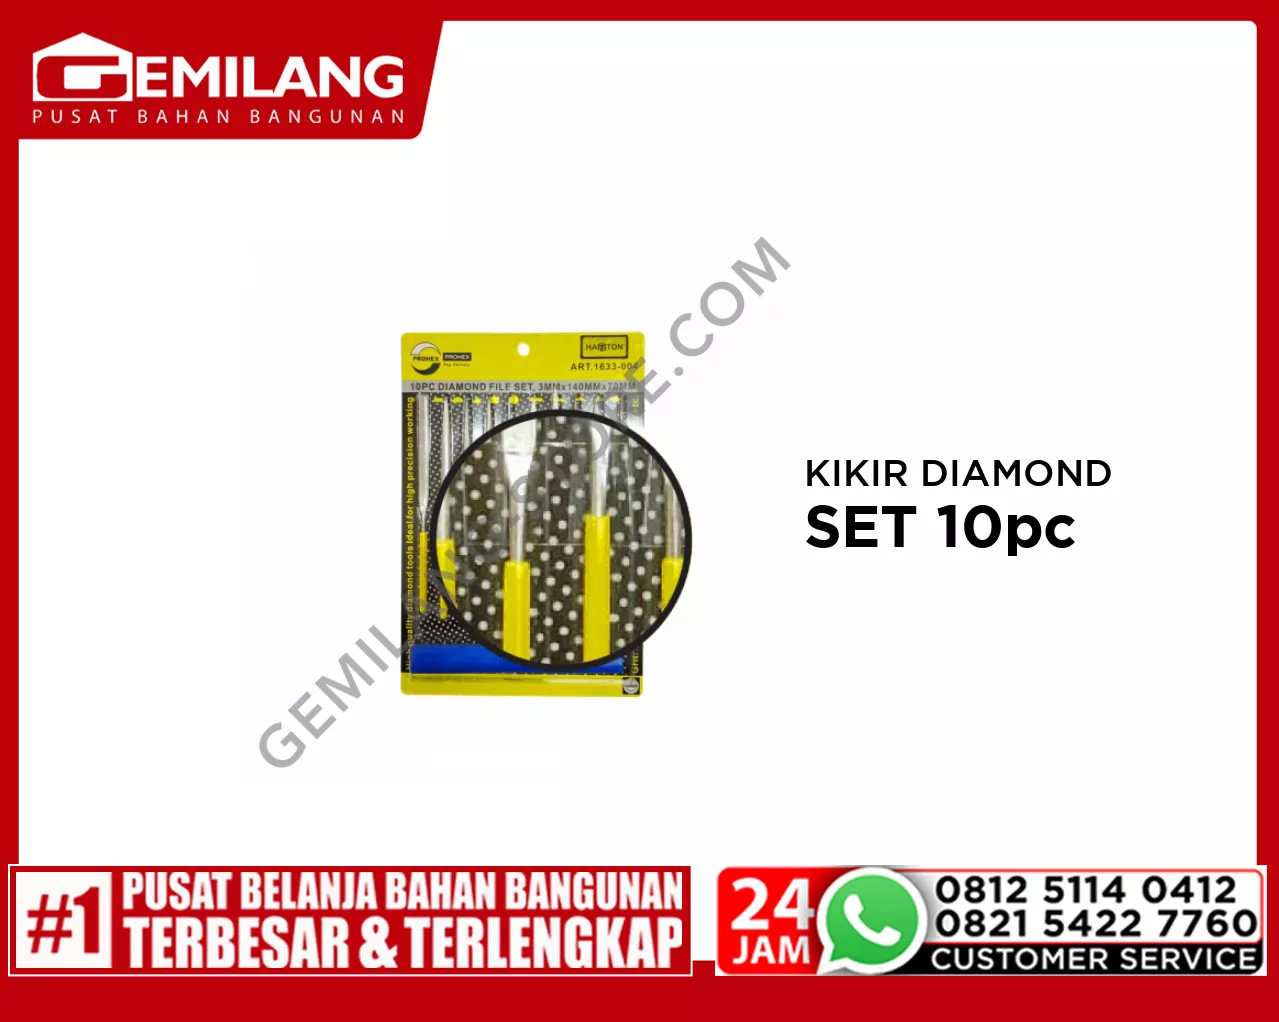 PROHEX KIKIR DIAMOND 10pc (1633-004)